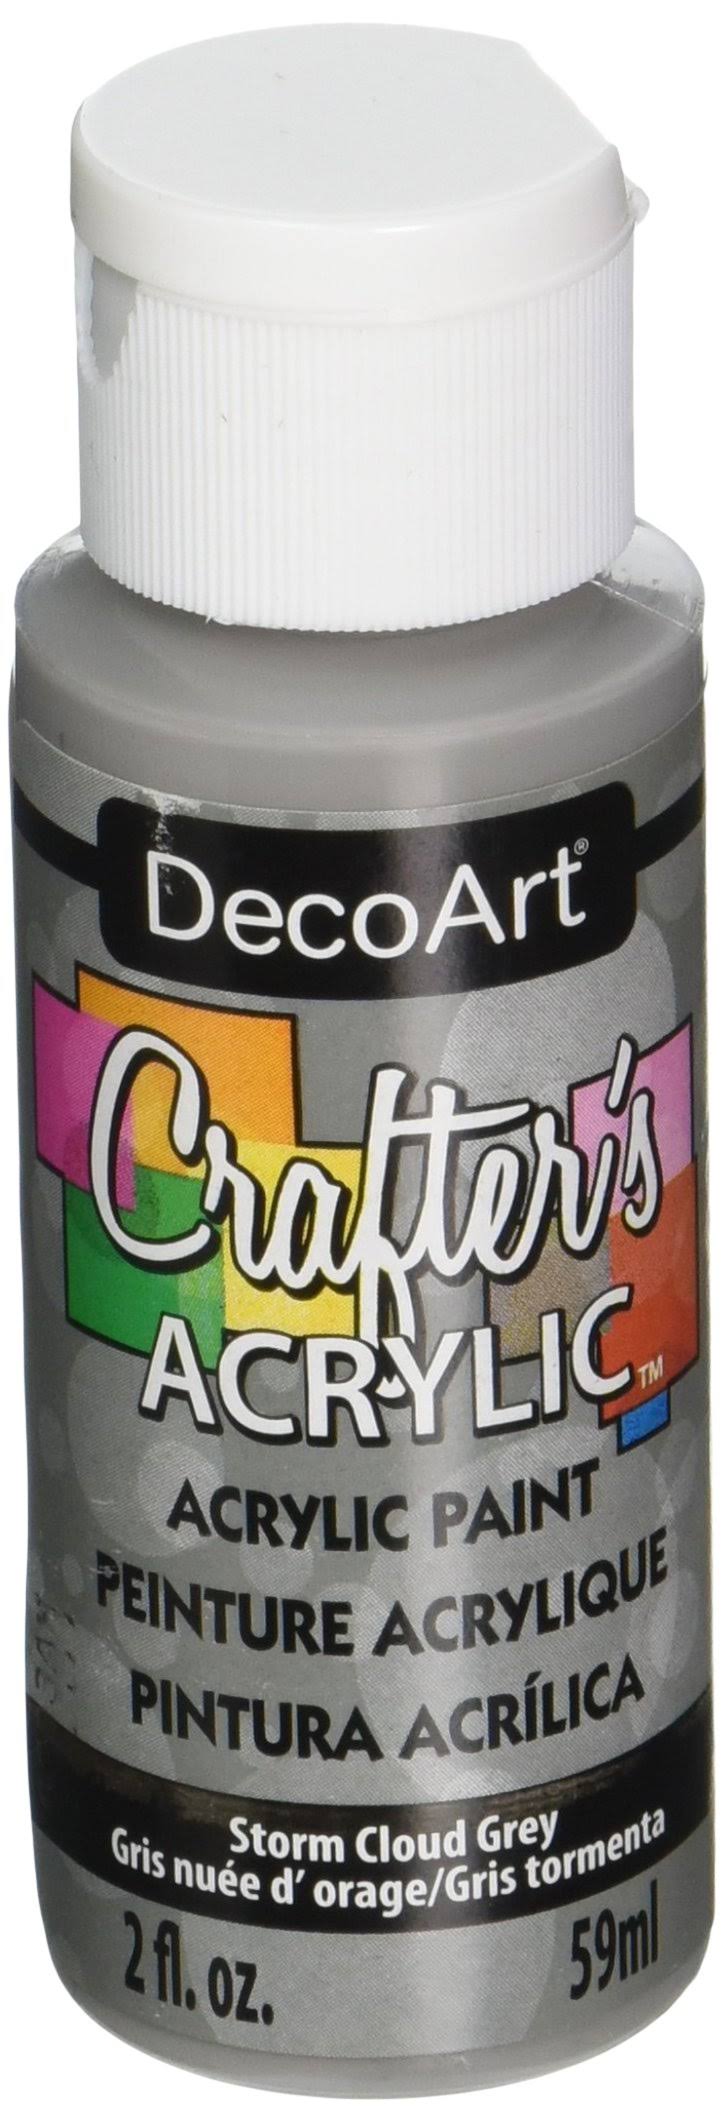 Deco Art Crafter's Acrylic Paint - #94 Storm Cloud Grey, 2oz